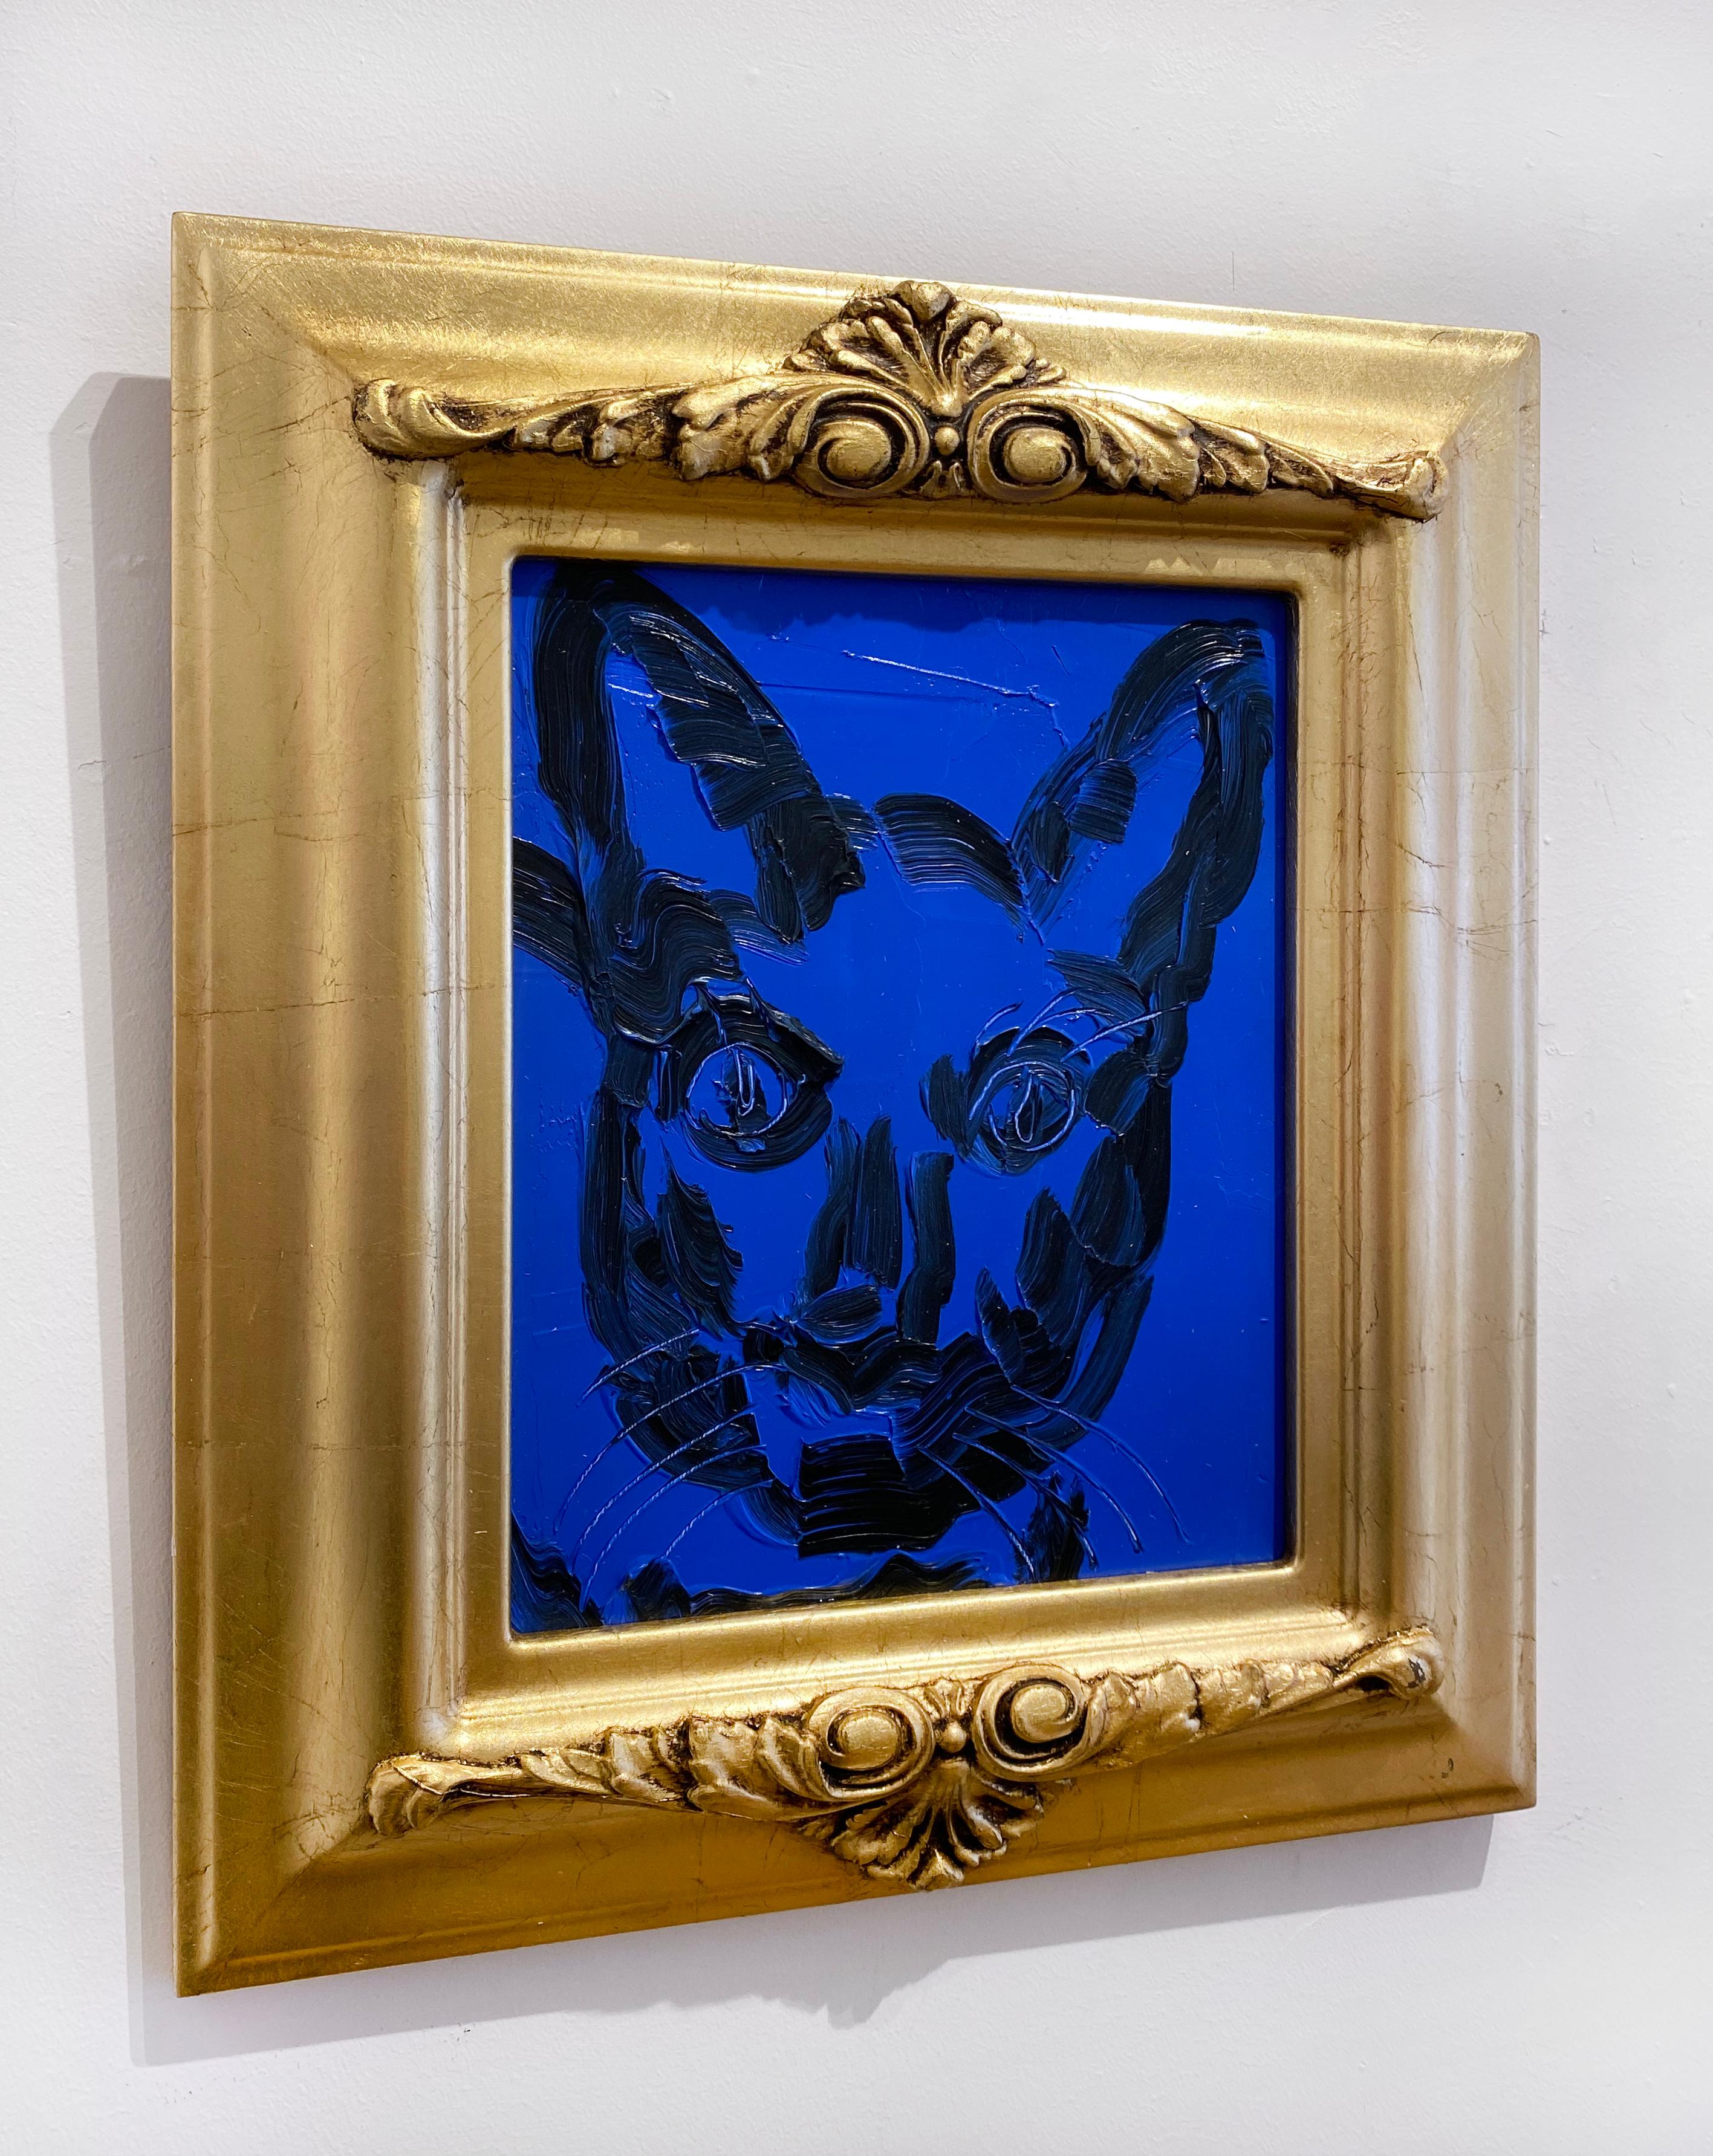 Artist:  Slonem, Hunt
Title:  Blue Man Meows
Series:  Cats
Date:  2022
Medium:  Oil on Wood
Unframed Dimensions:  10